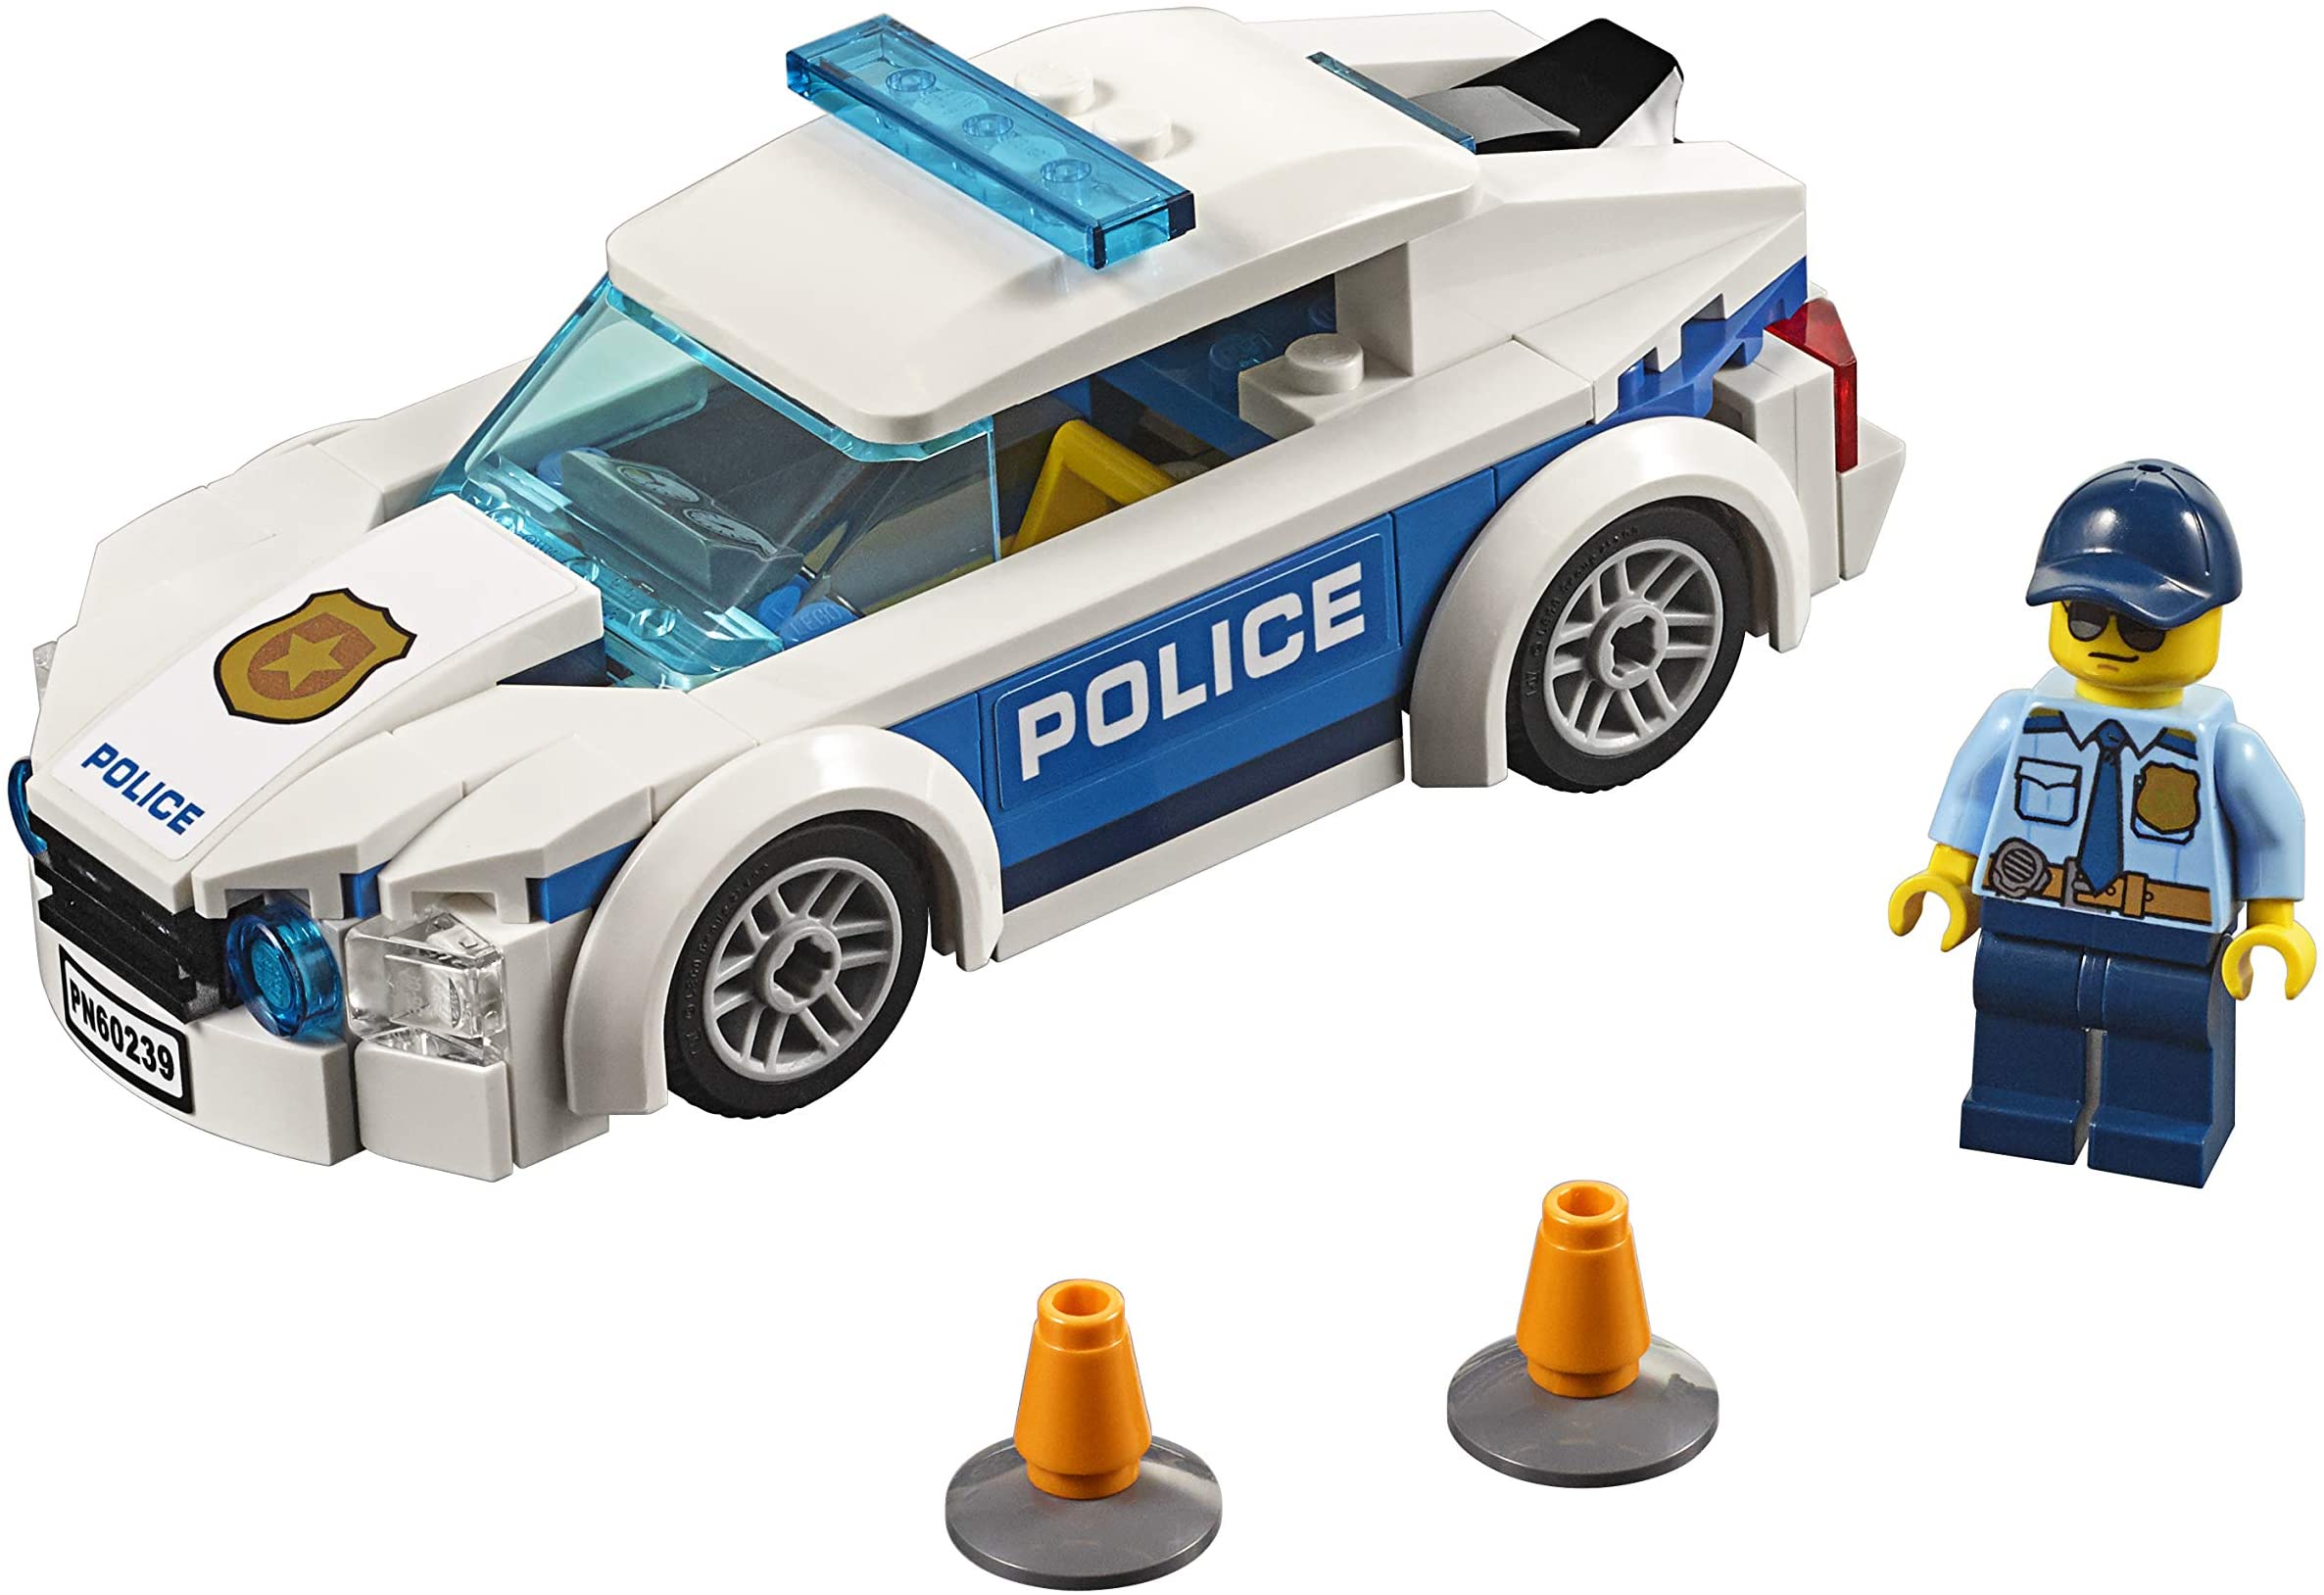 LEGO Aged 5 Plus City Police Patrol Car Toy Of 92 Piece Sets